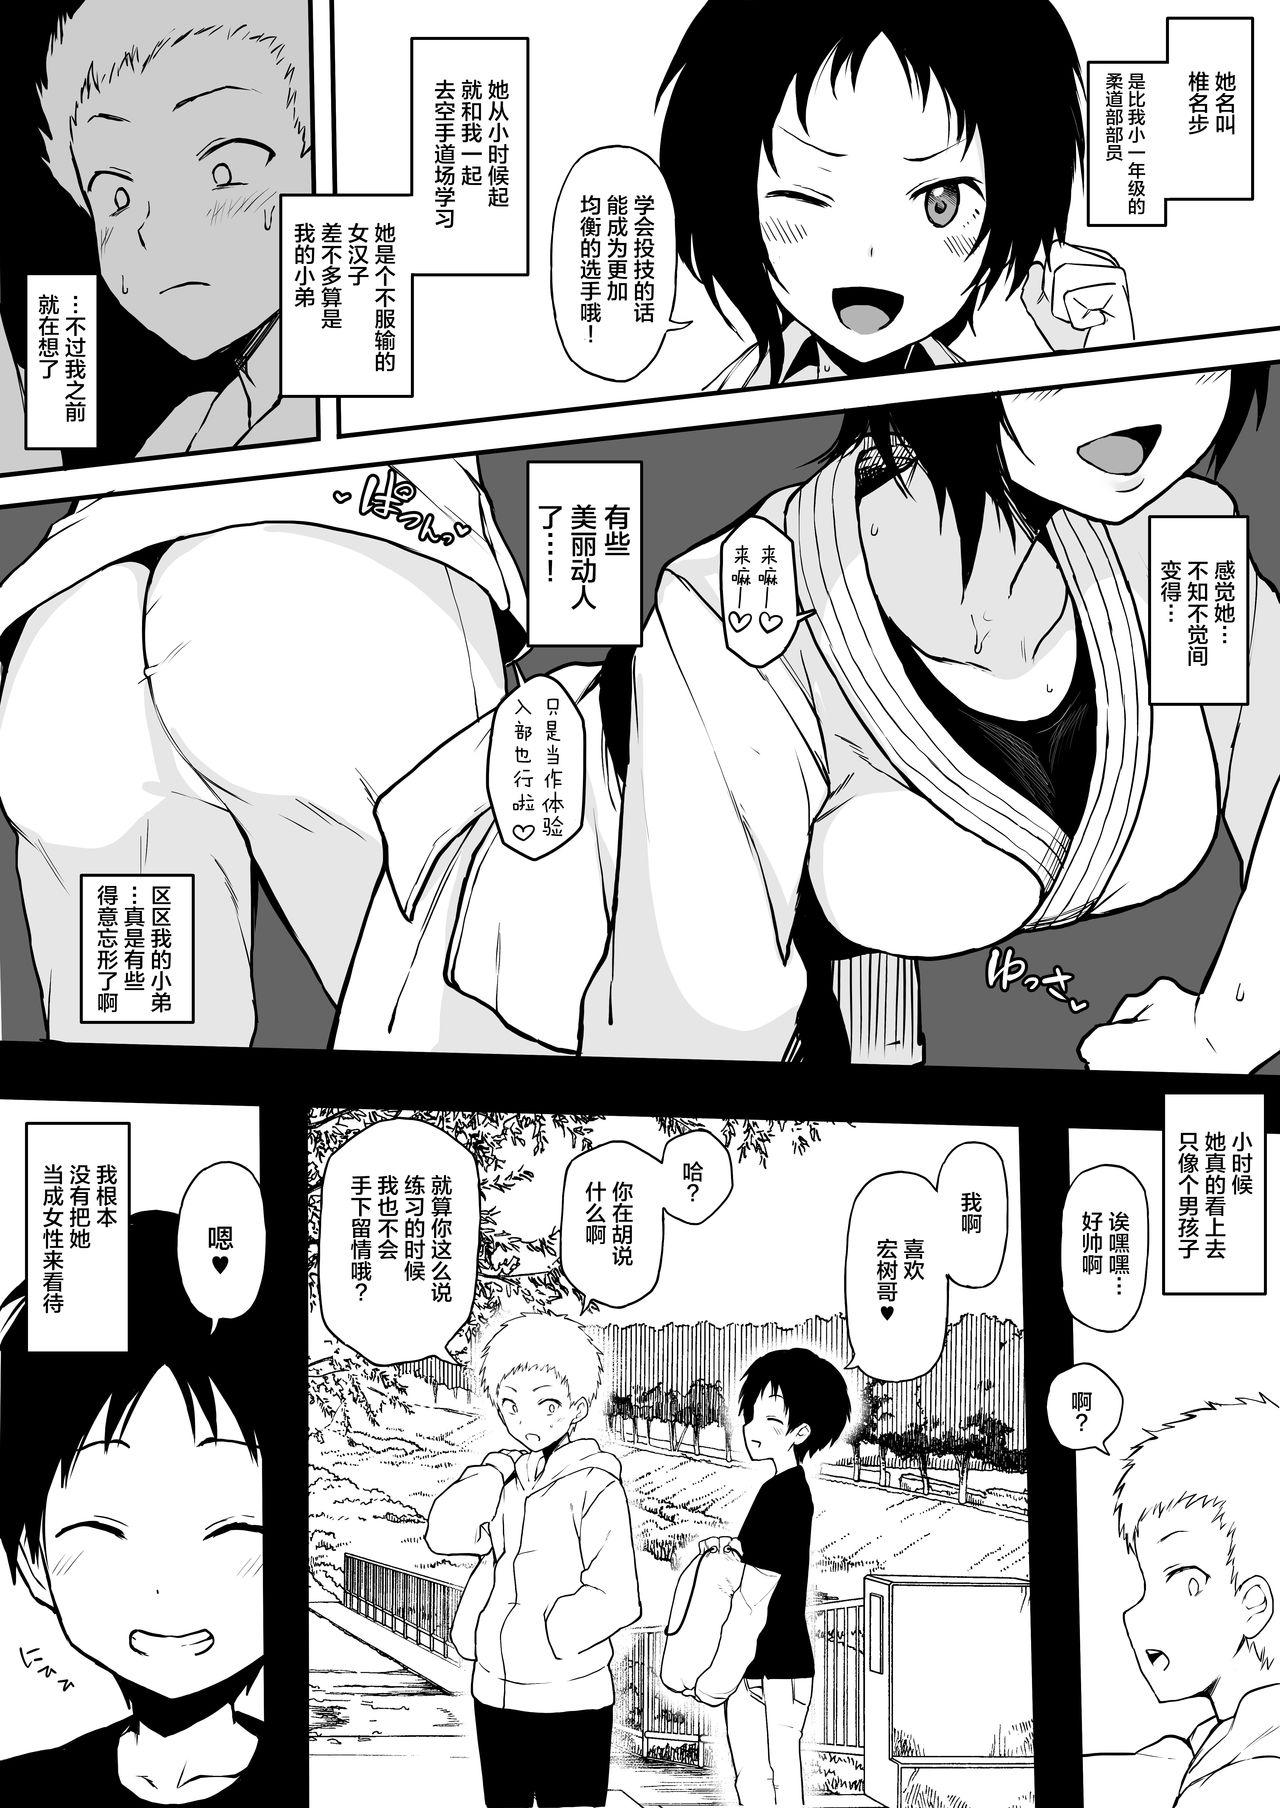 Kokujin no Tenkousei NTR ru Chapters 1-6 part 1 Plus Bonus chapter: Stolen Mother’s Breasts 40